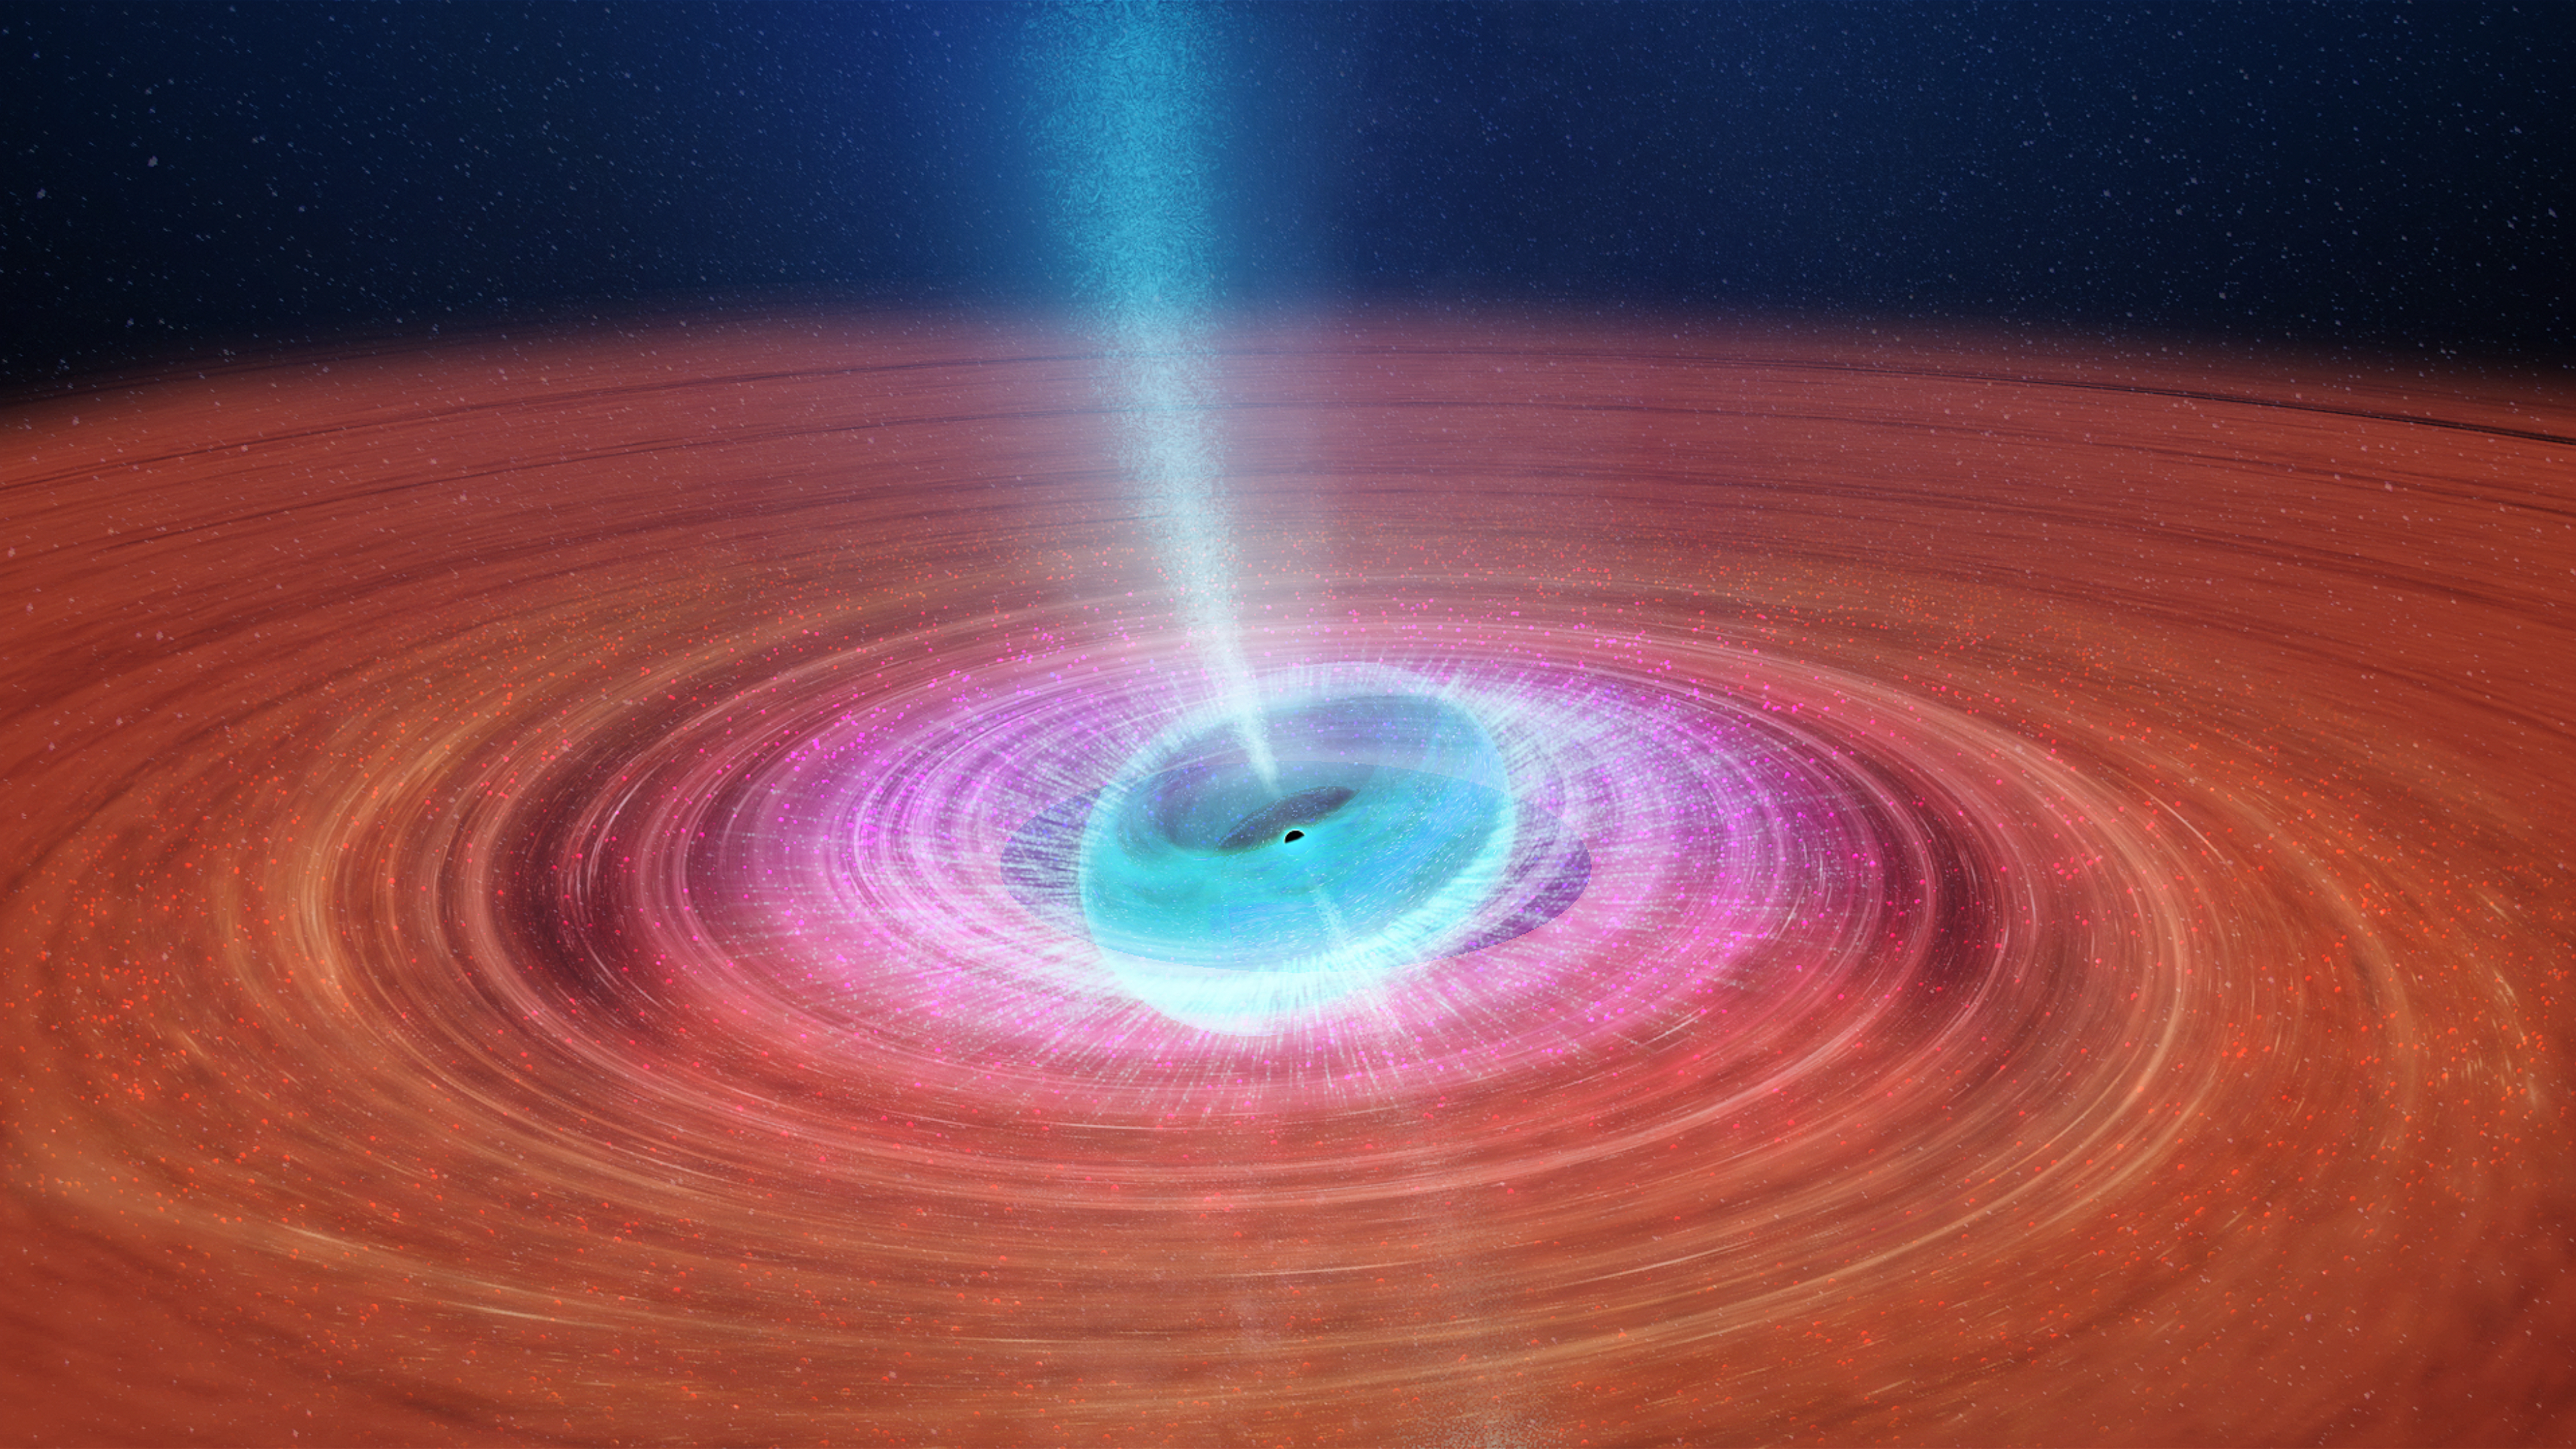 V404 Cygni Black hole, International Centre for Radio Astronomy Research